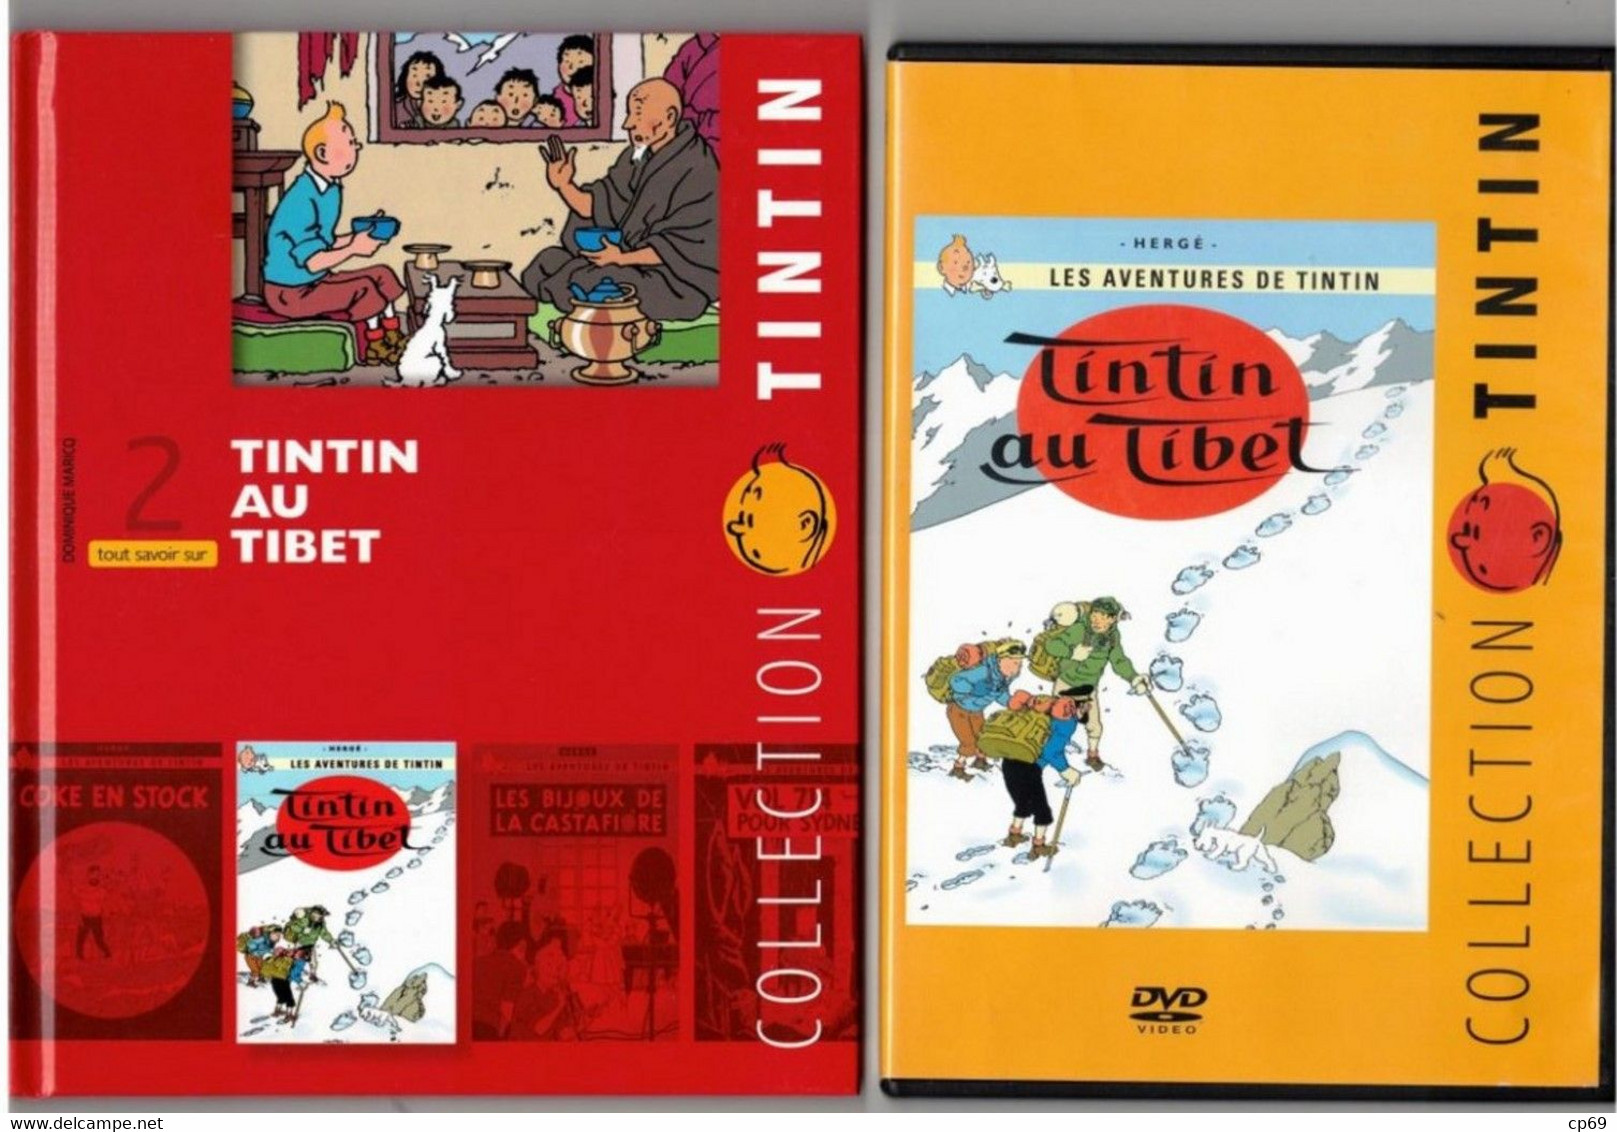 Tintin Hergé / Moulinsart 2010 Milou Chien Dog Cane Tintin Au Tibet Capitaine Haddock N°2 DVD + Livret Explicatif B.Etat - Animatie